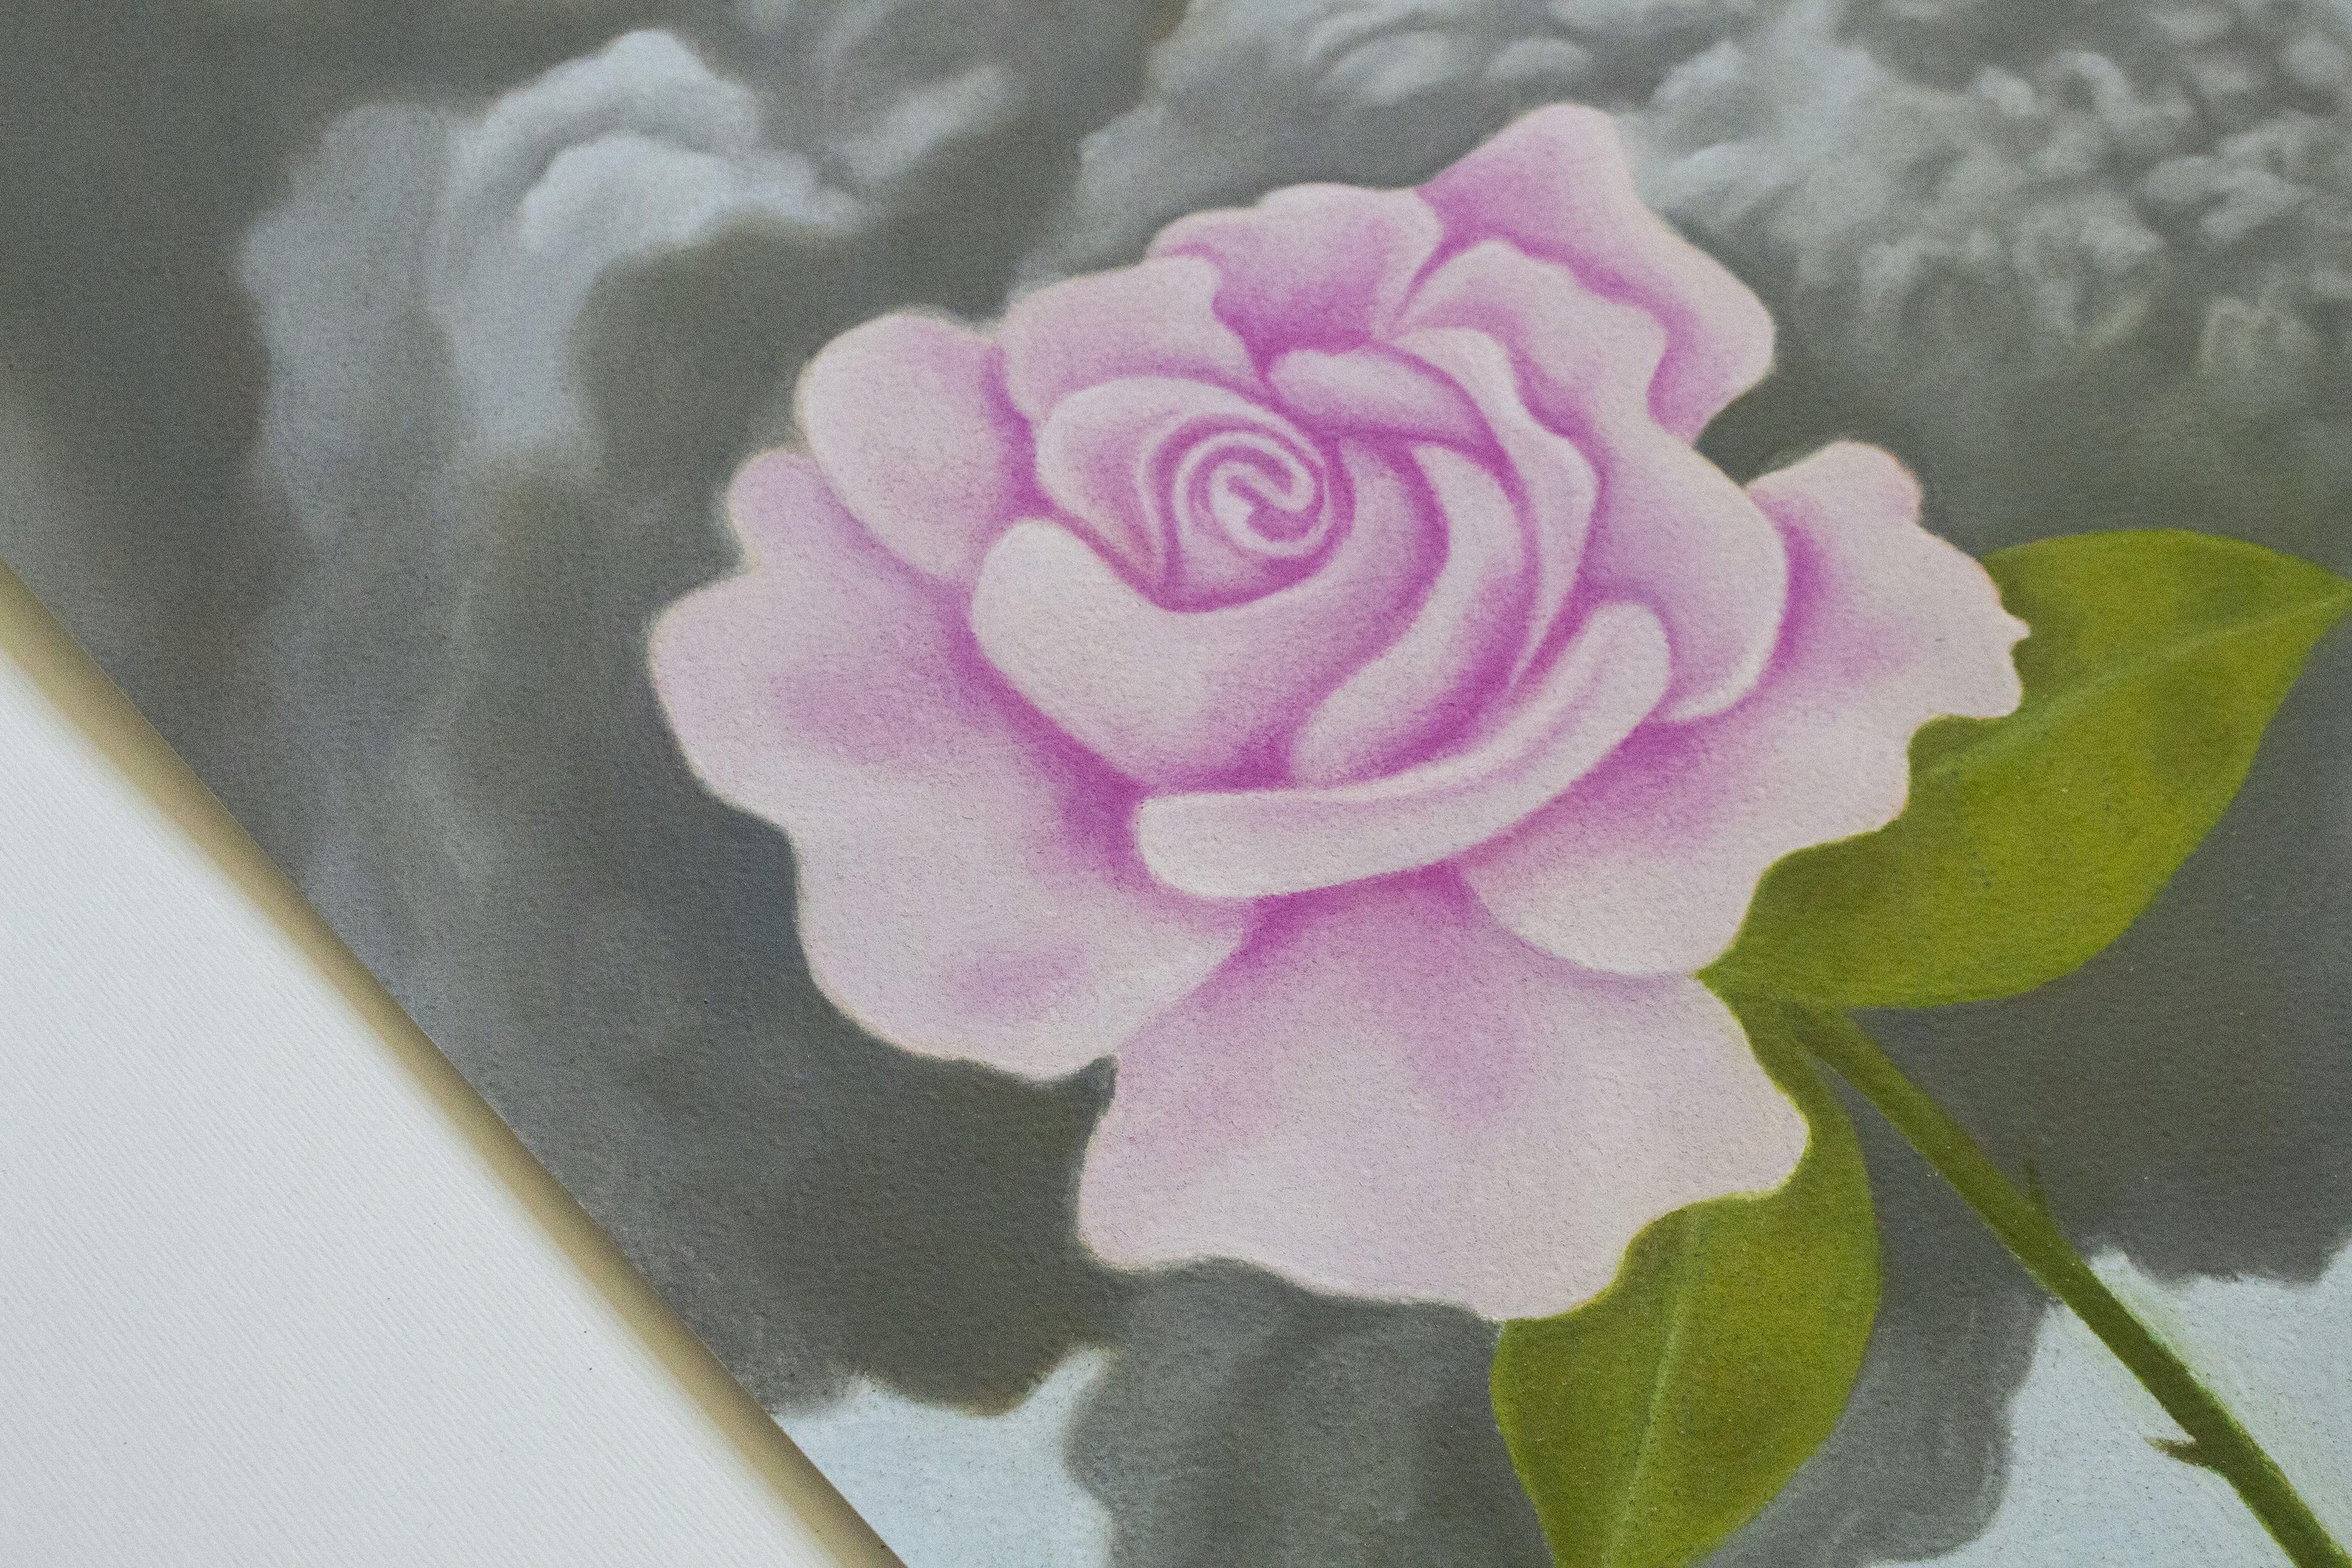 Close-up a pink rose in artist Rachel Levit Ruiz' pastel drawing.